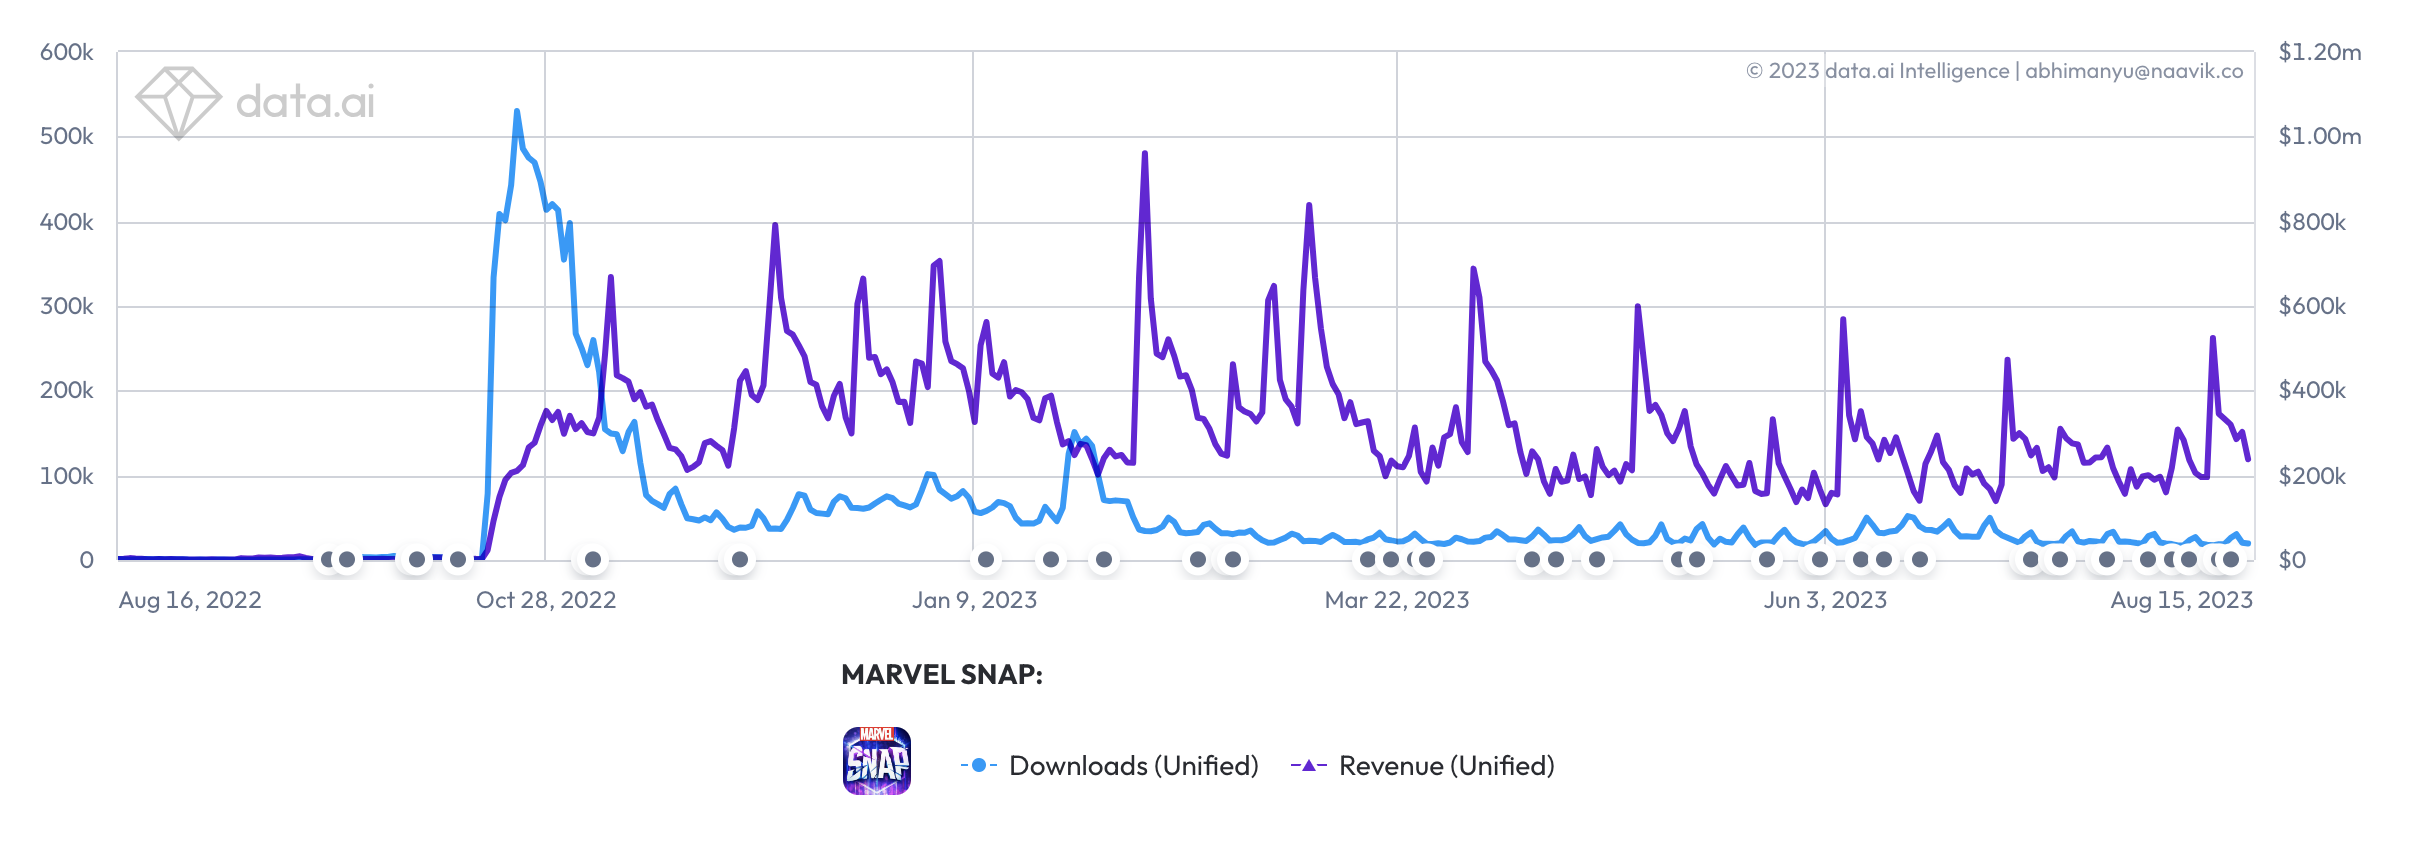 marvel snap downloads revenue 2